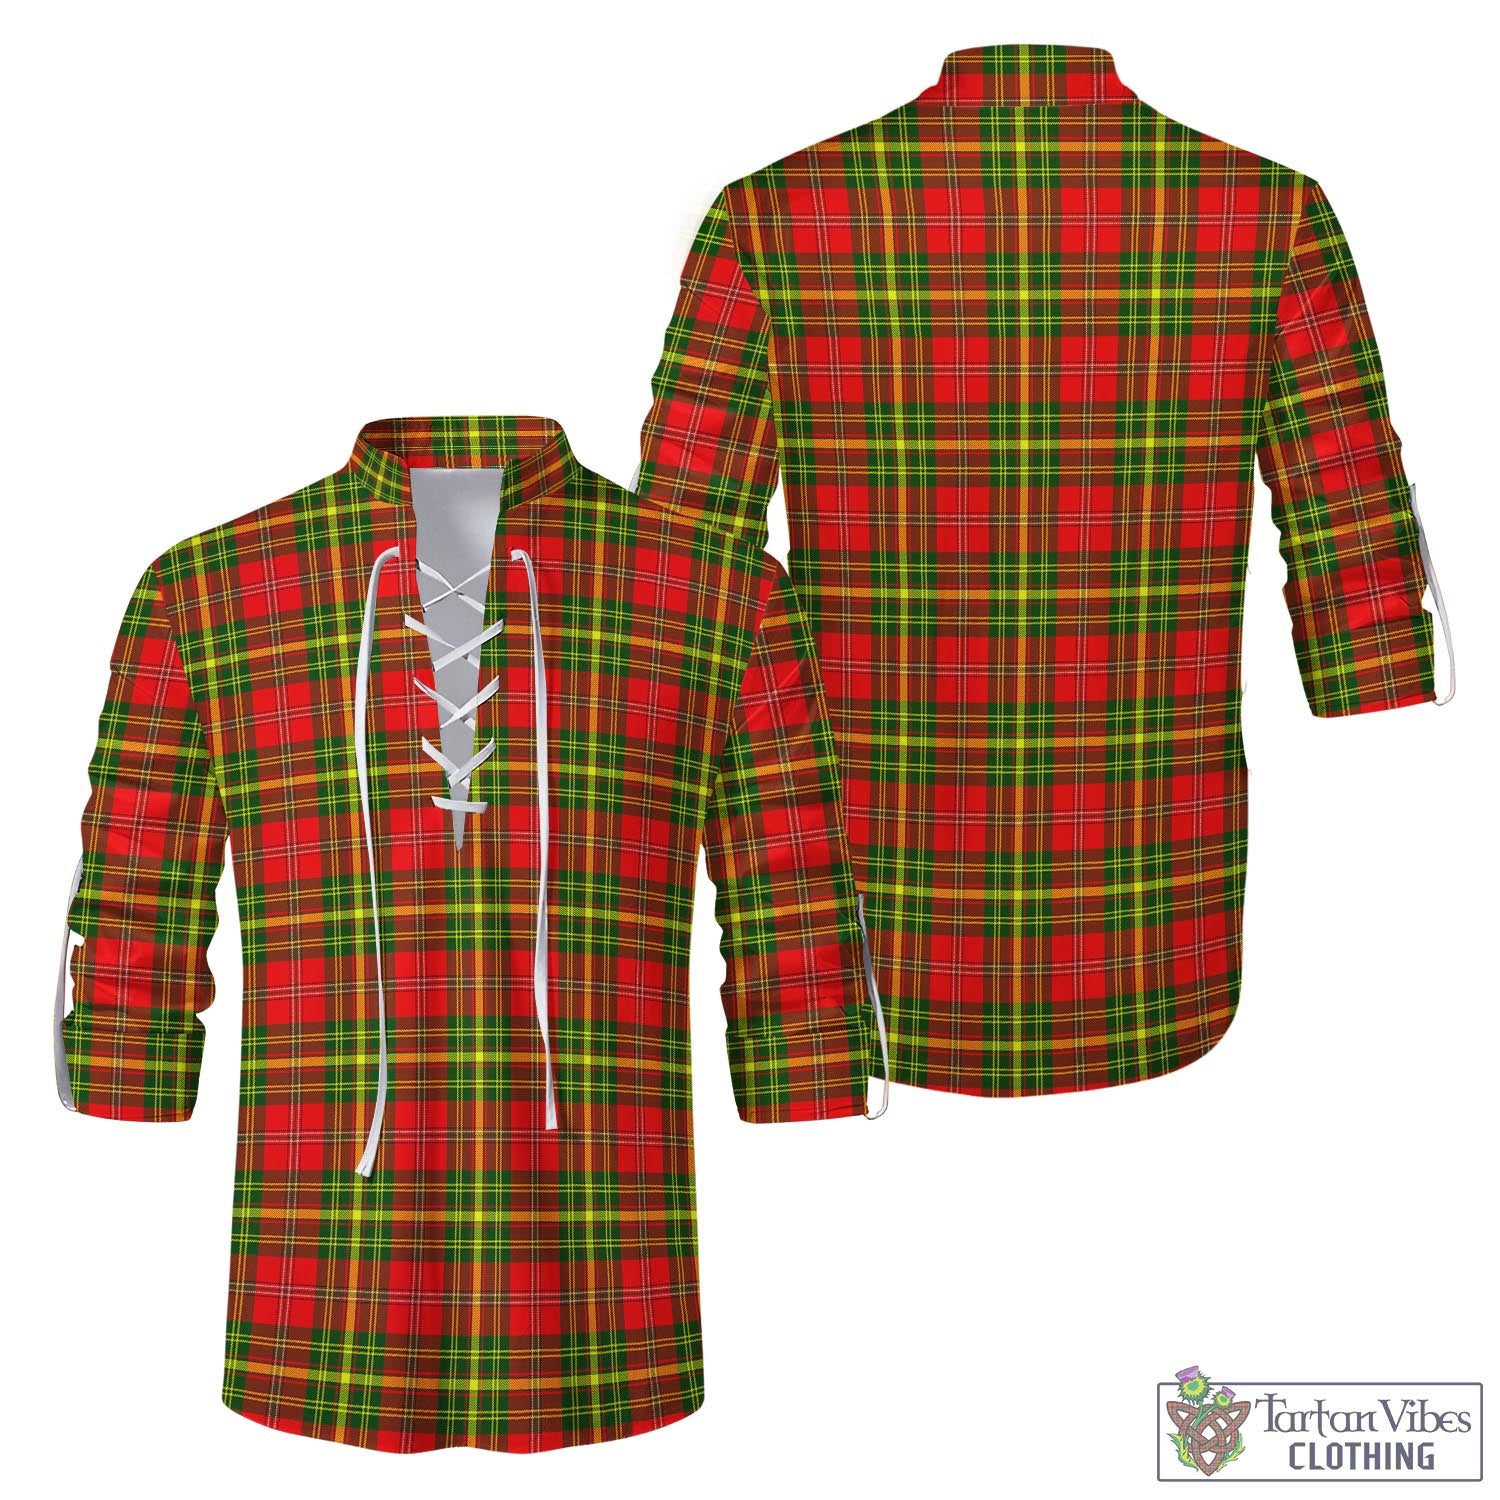 Tartan Vibes Clothing Leask Modern Tartan Men's Scottish Traditional Jacobite Ghillie Kilt Shirt